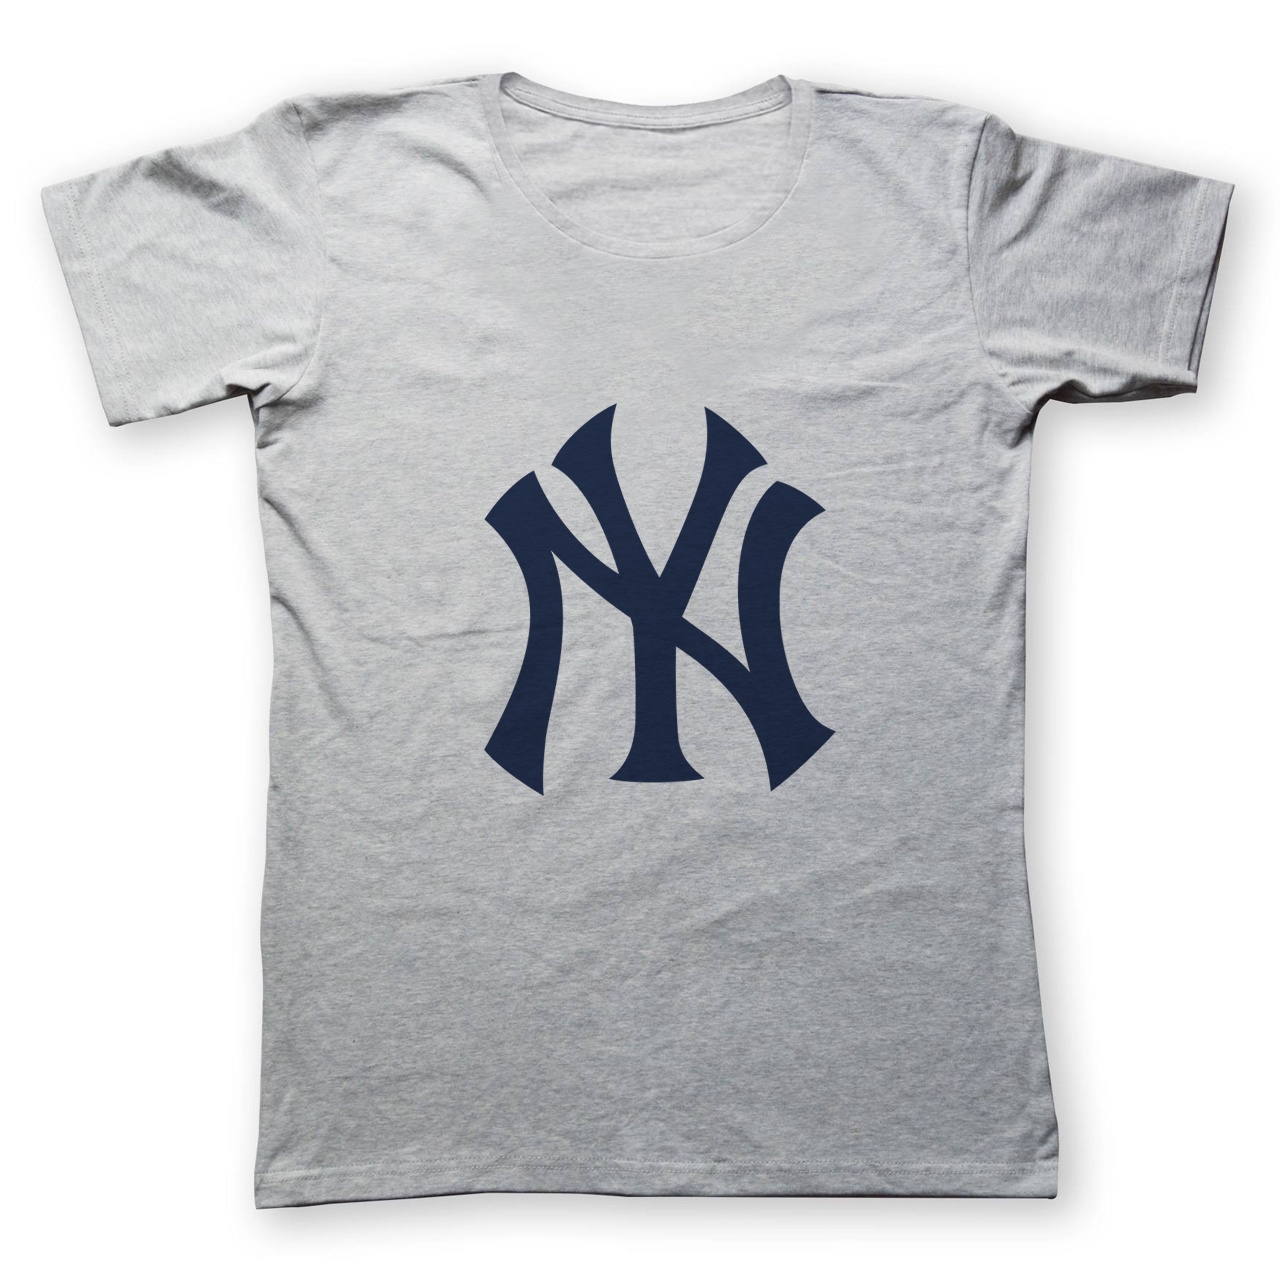 تی شرت نه به رسم طرح نیویورک کد 4417